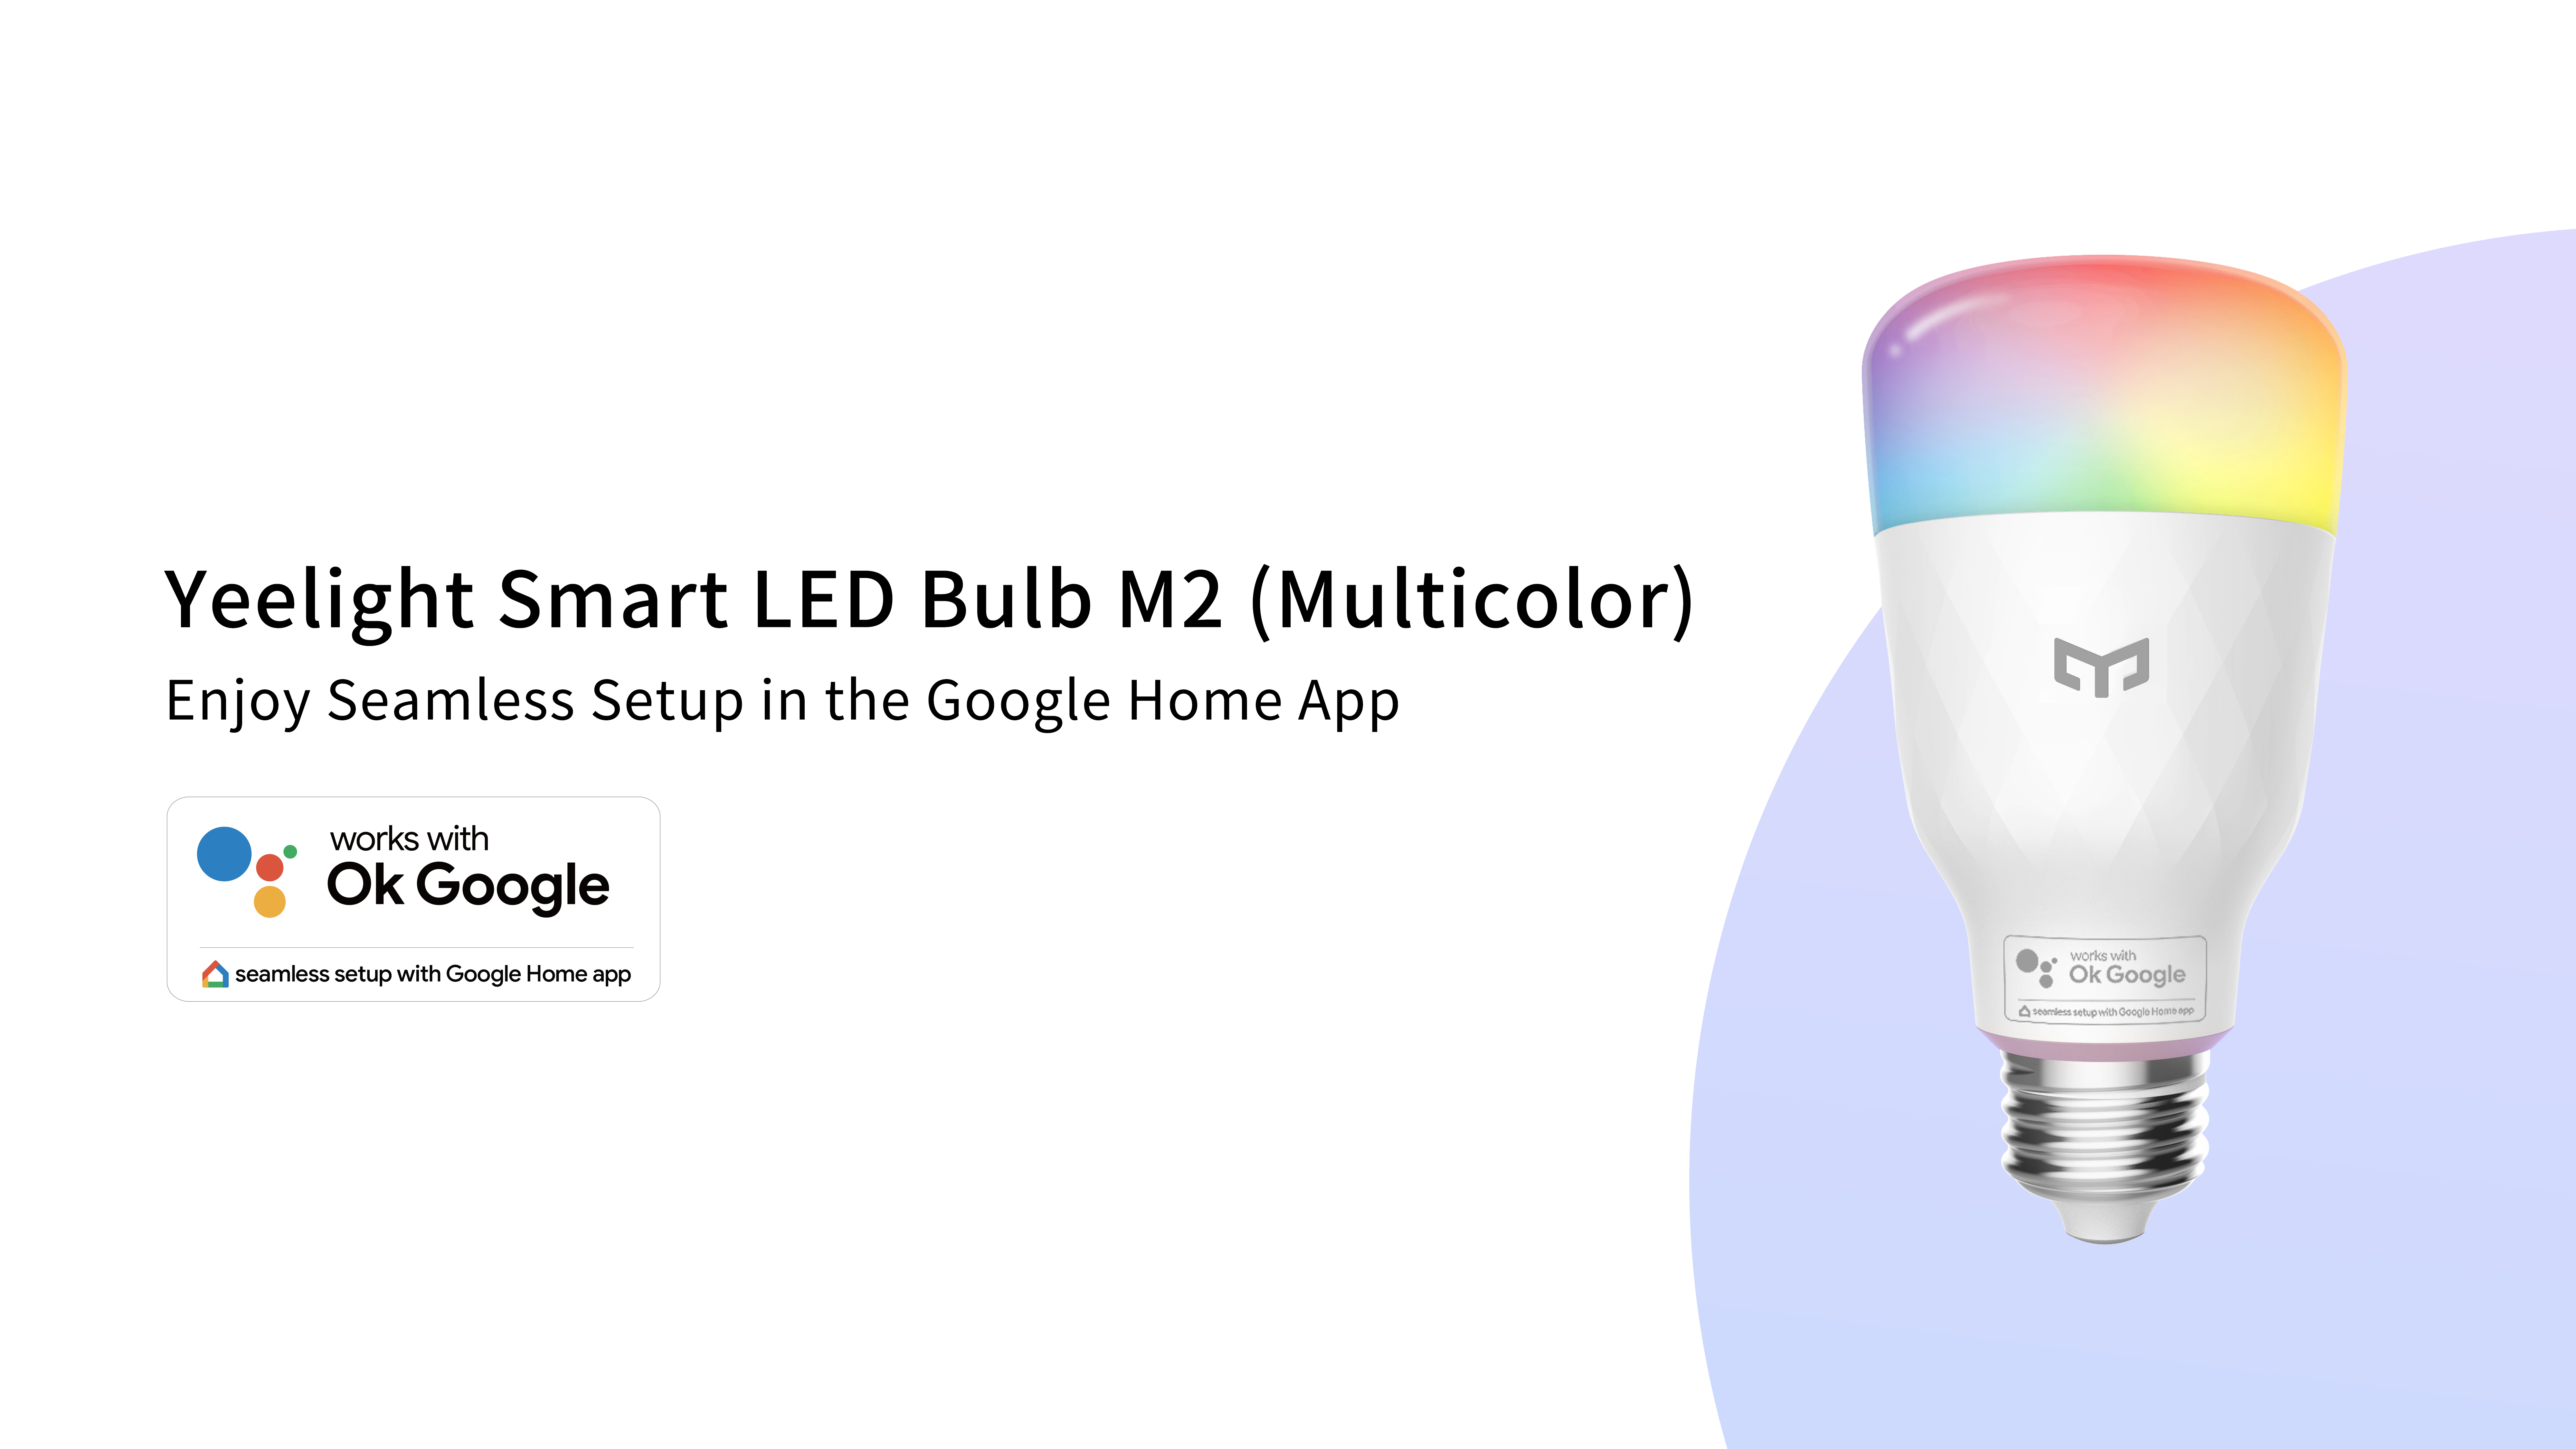 Yeelight Debuts Smart LED Bulb M2 that Google Setup - Gizmochina